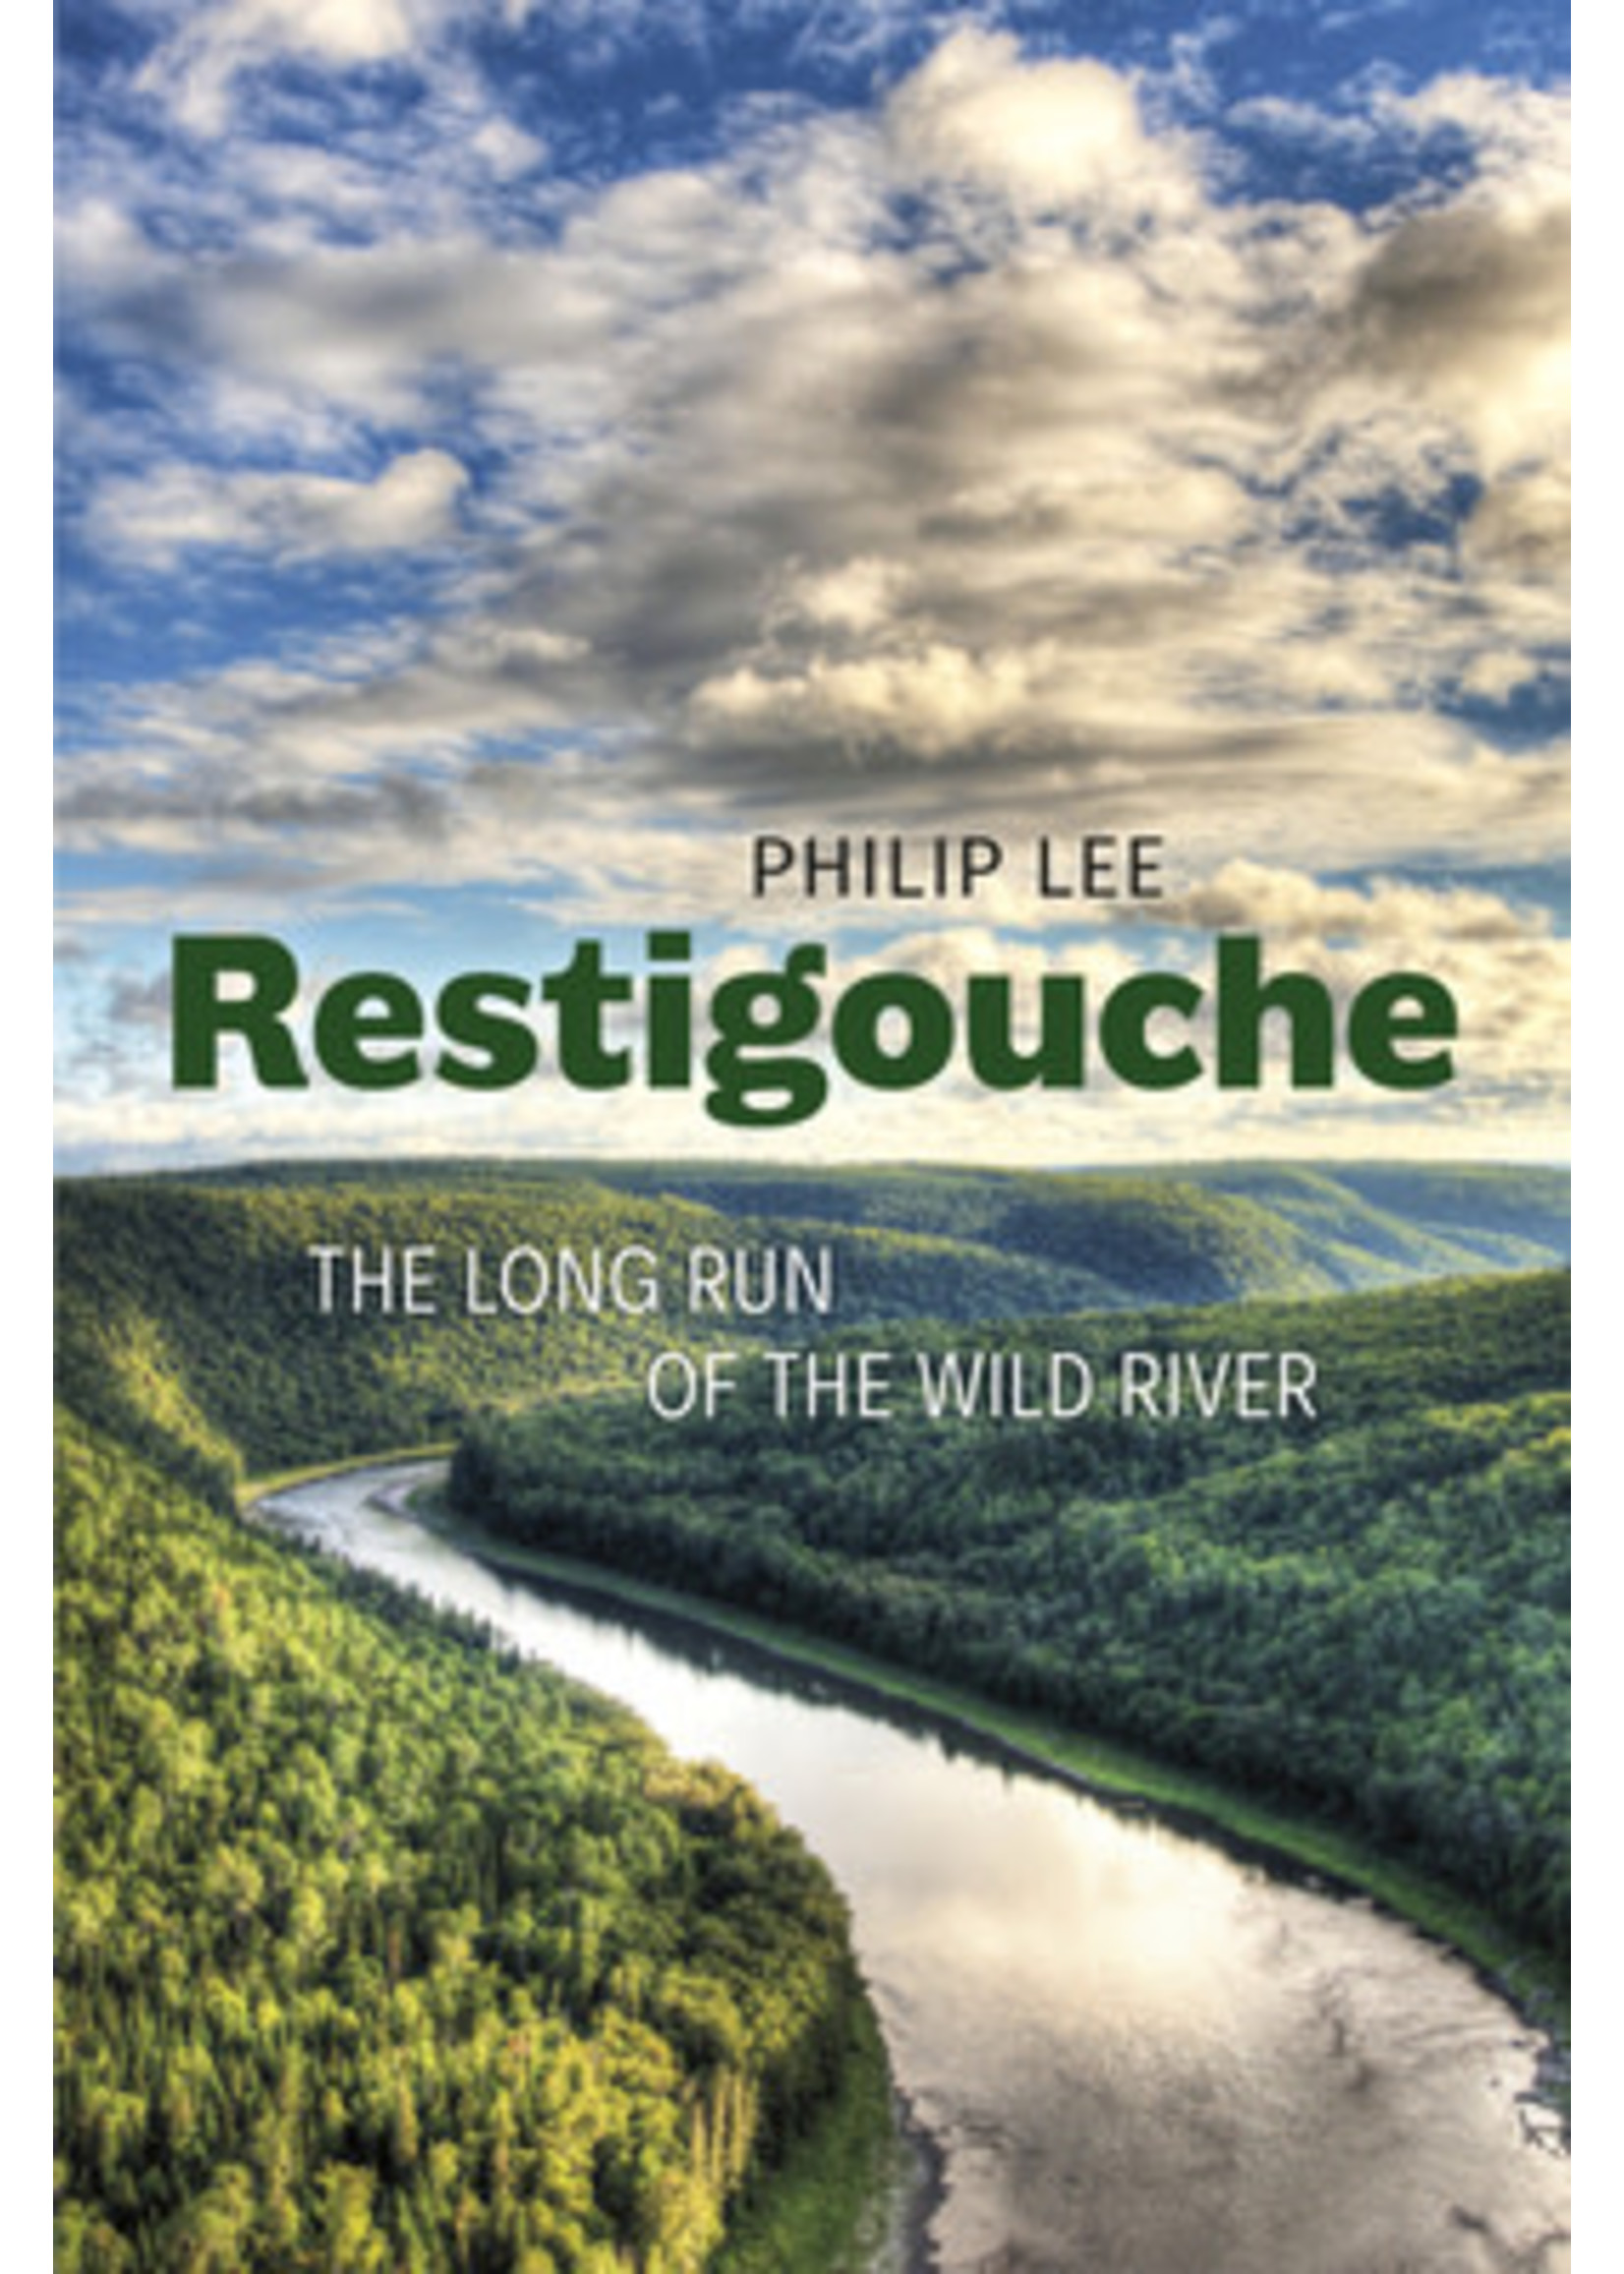 Restigouche: The Long Run of the Wild River by Philip Lee